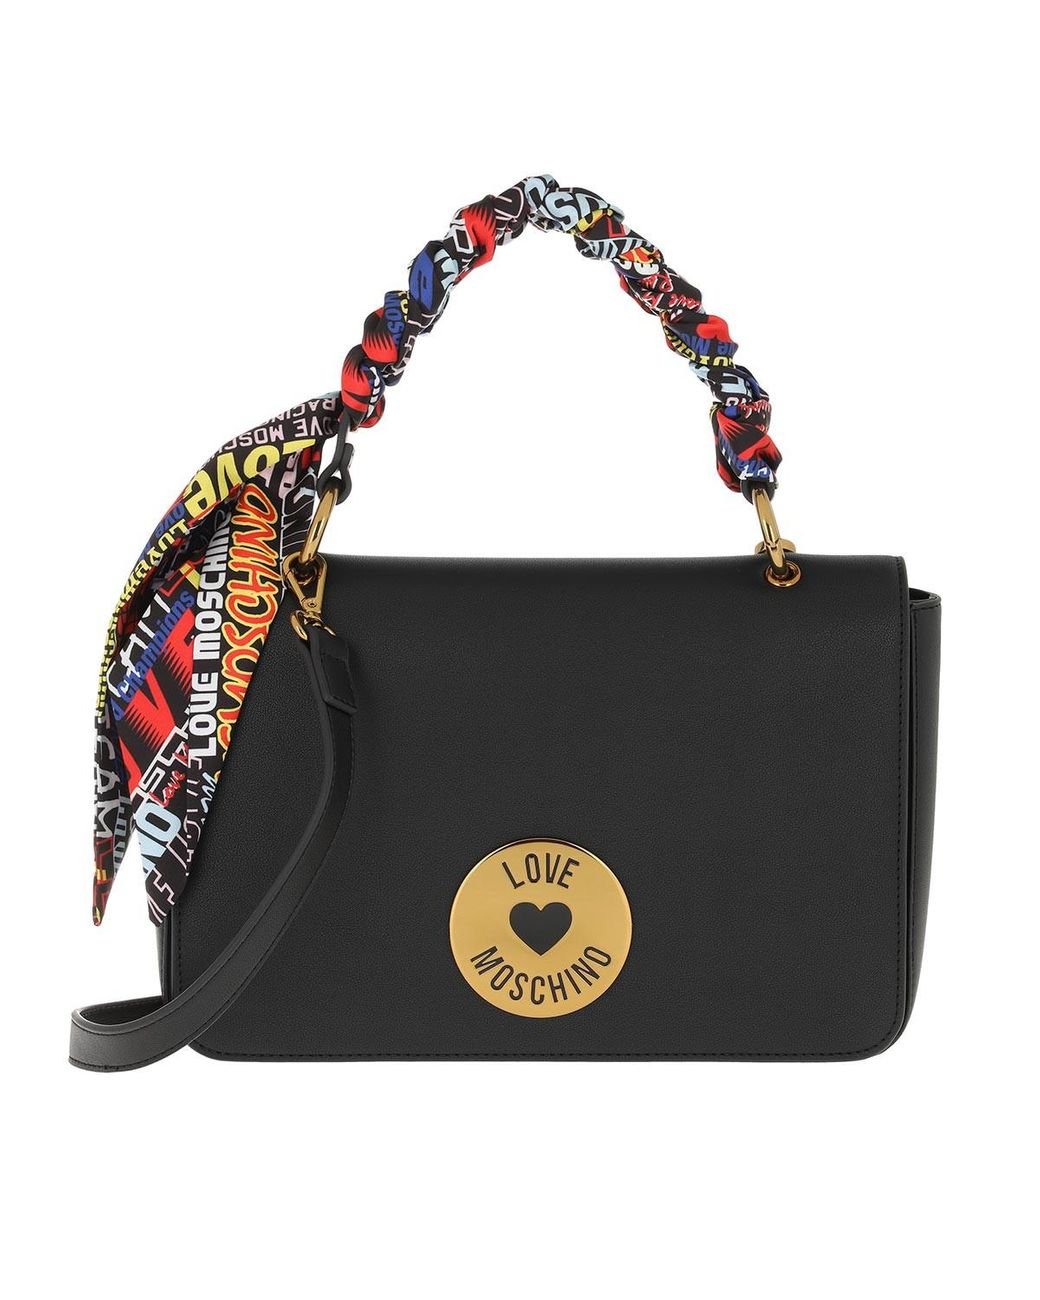 Nero Black Love Moschino Borsa Canvas E Pebble Pu W x H L 7x15x20 cm Women/’s Top-Handle Bag